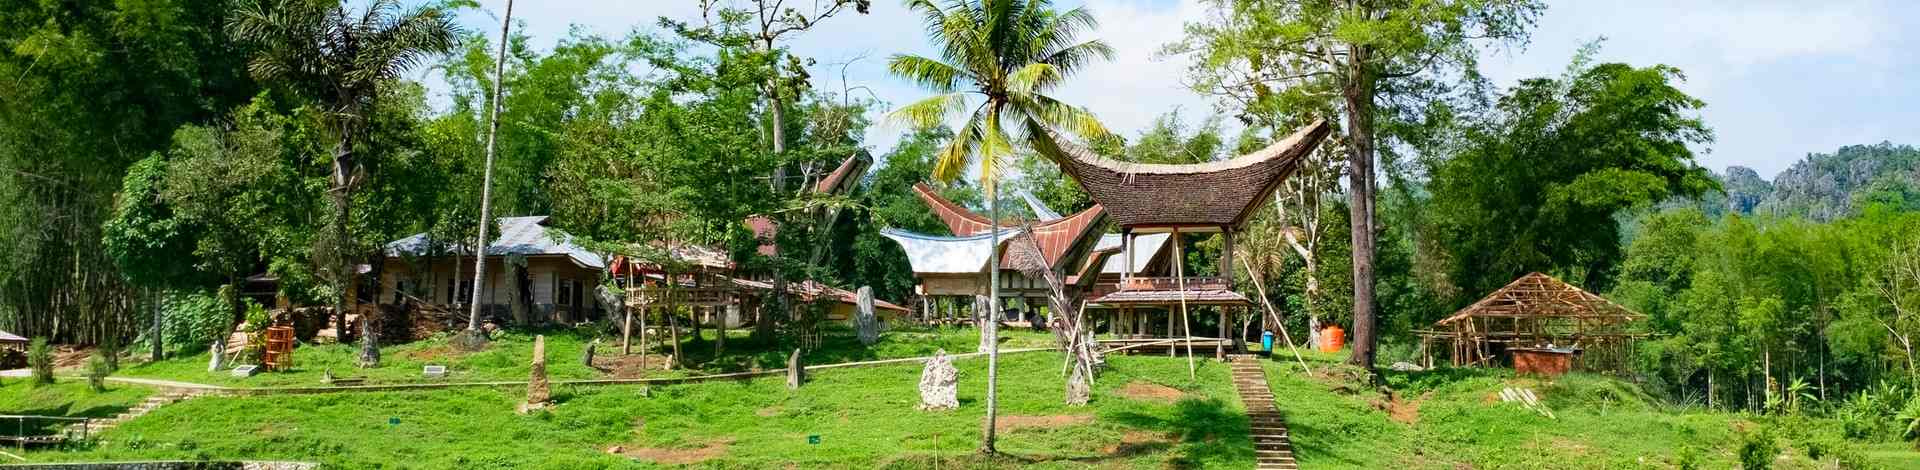 Célèbes Sulawesi Pays Toraja